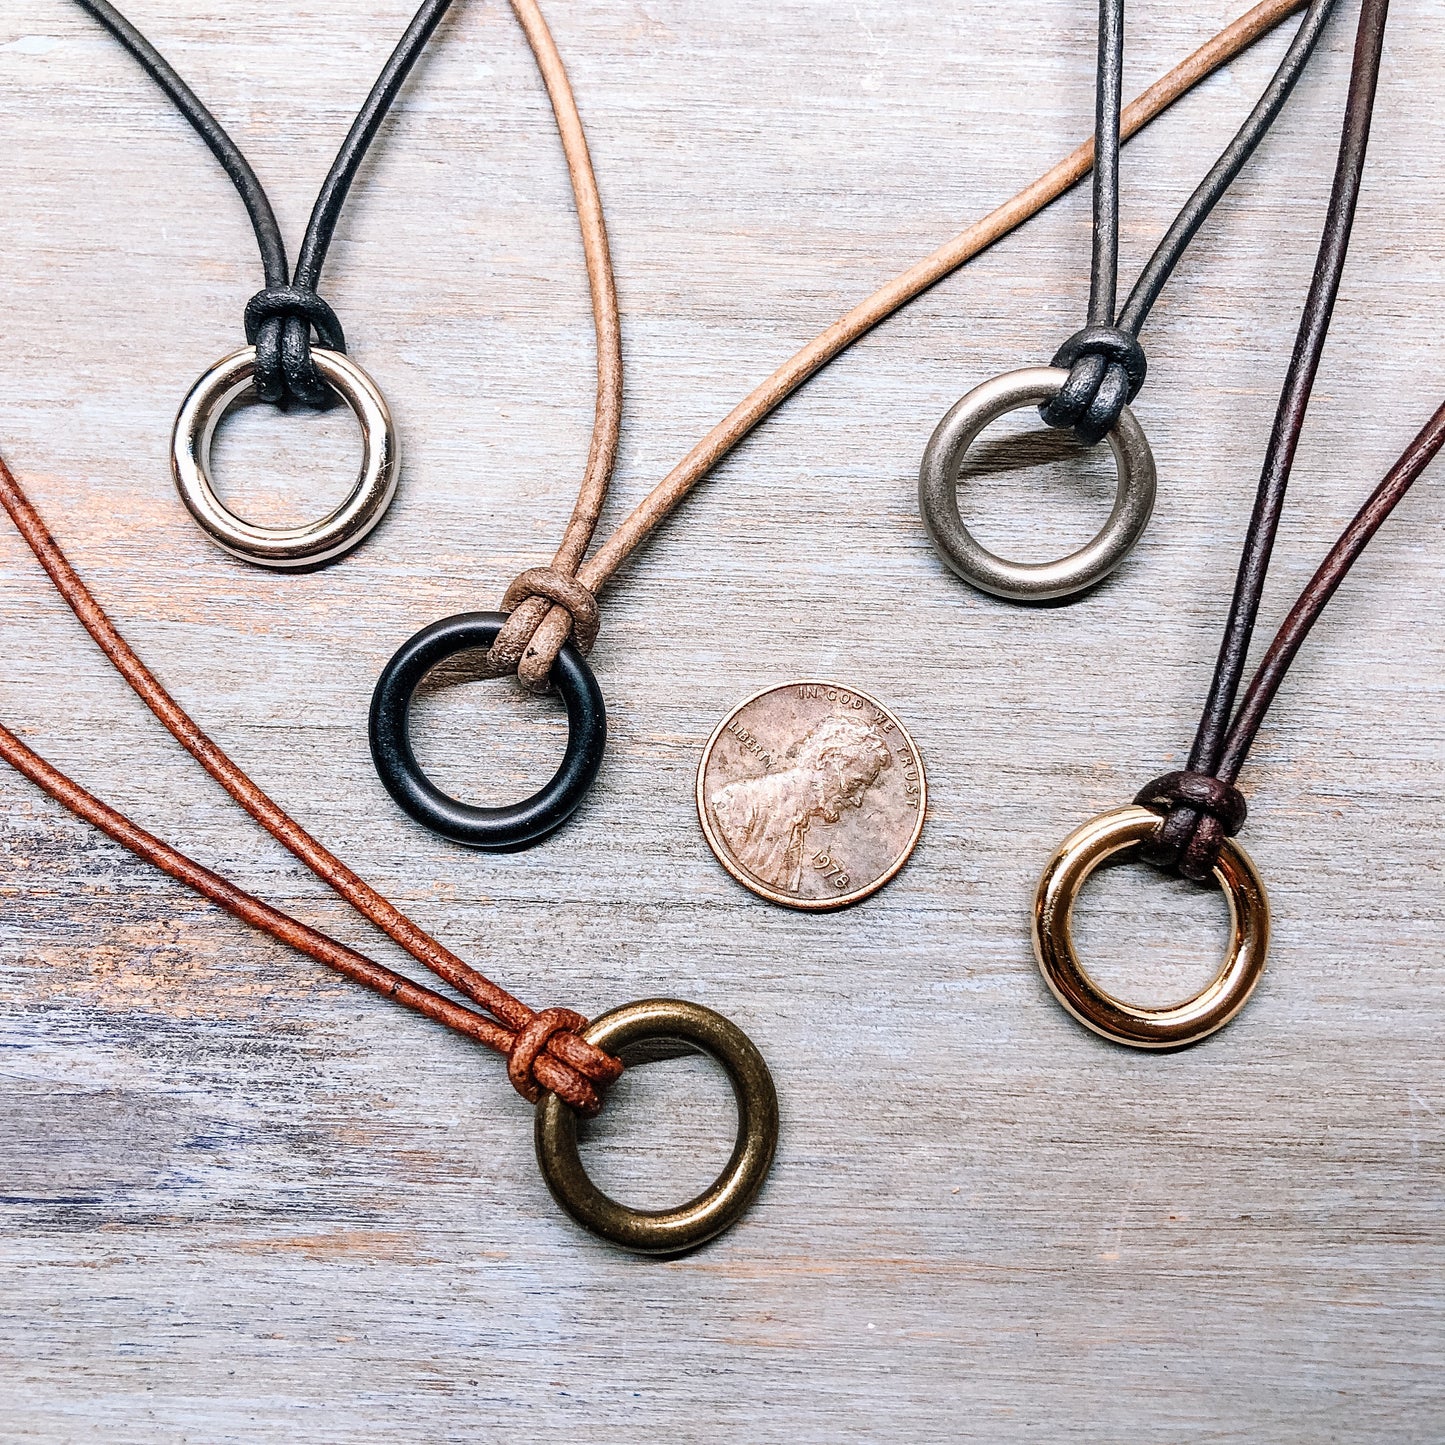 Leather cord necklace for women men | Pendant necklace for men women | Boho leather necklace | Layering necklace